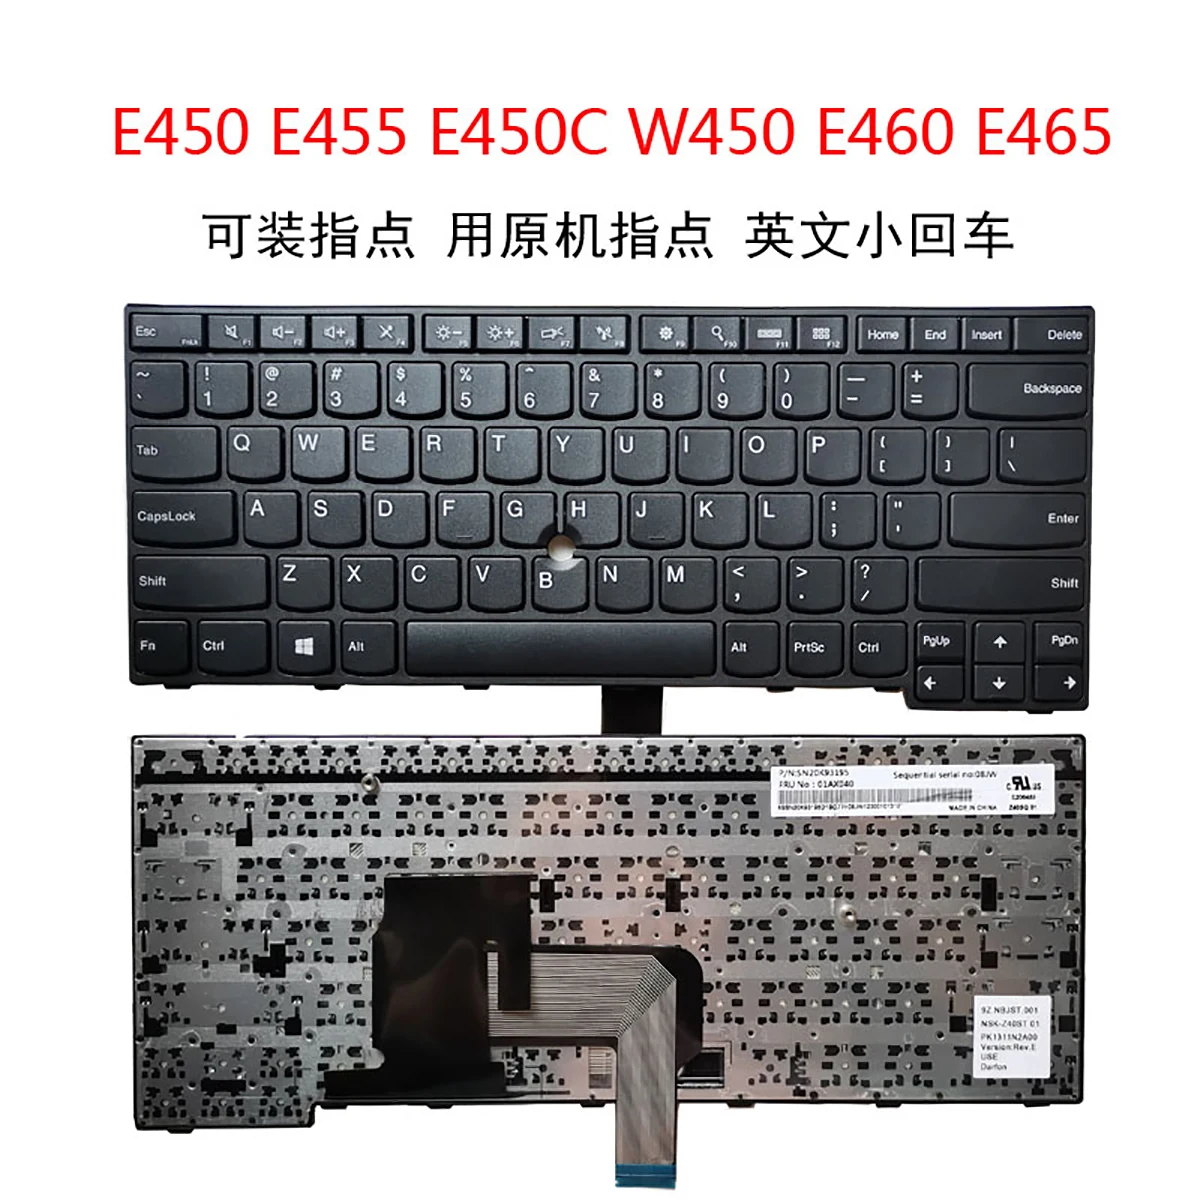 

Laptop English Keyboard For LENOVO Thinkpad E470 E475 E470C E450 E455 E450C W450 E460 E465 layout Keyboard